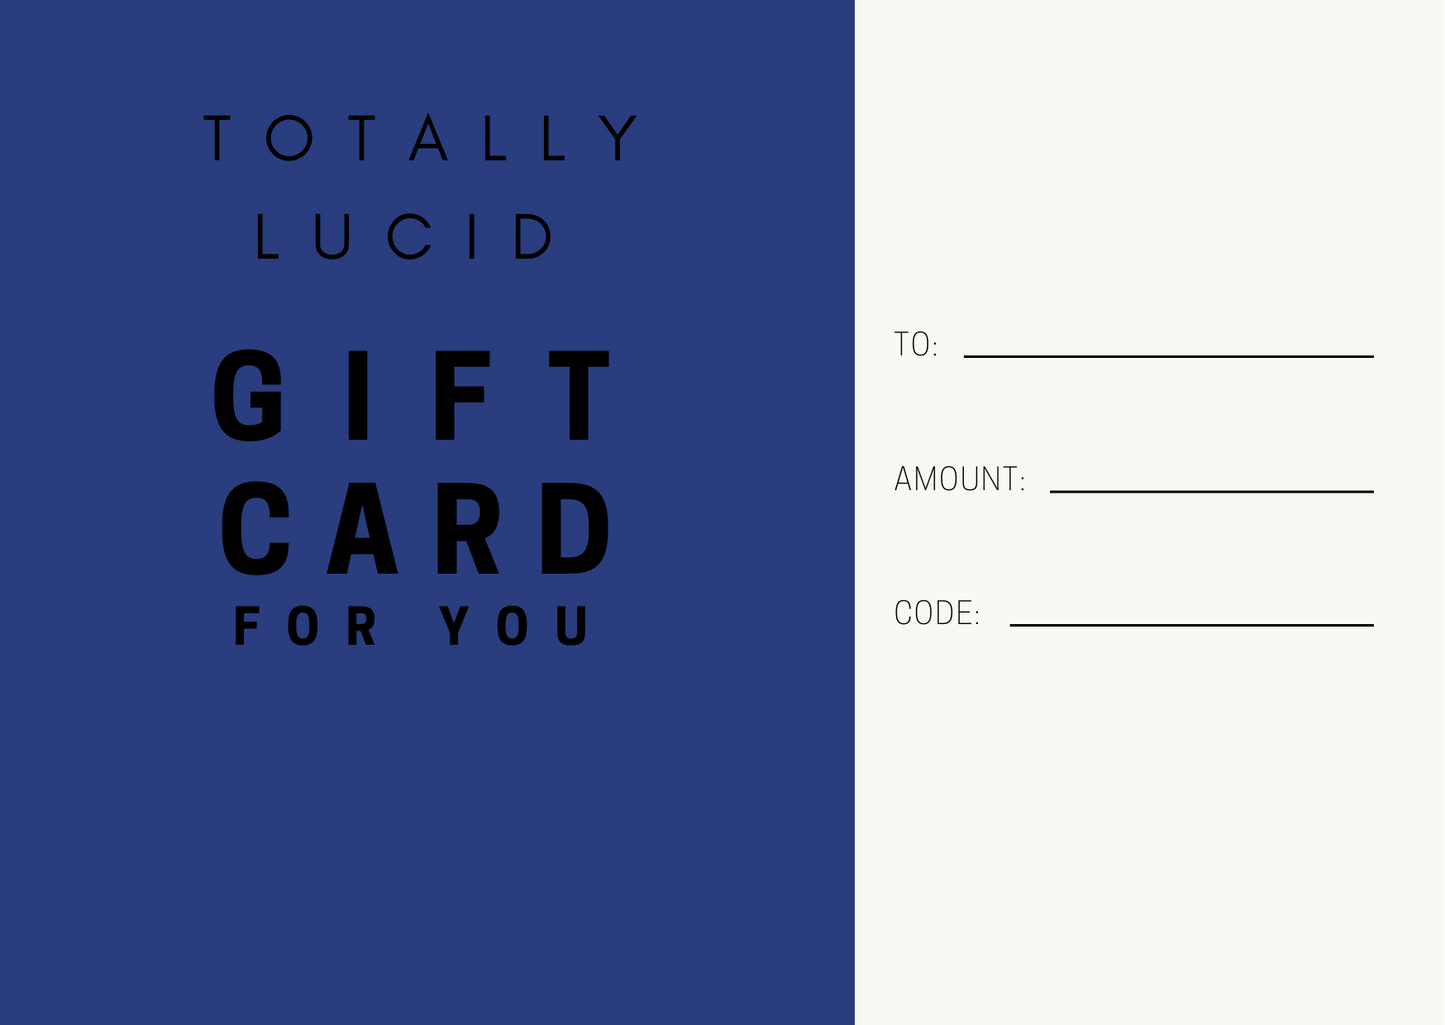 Totally LUCID Gift Card